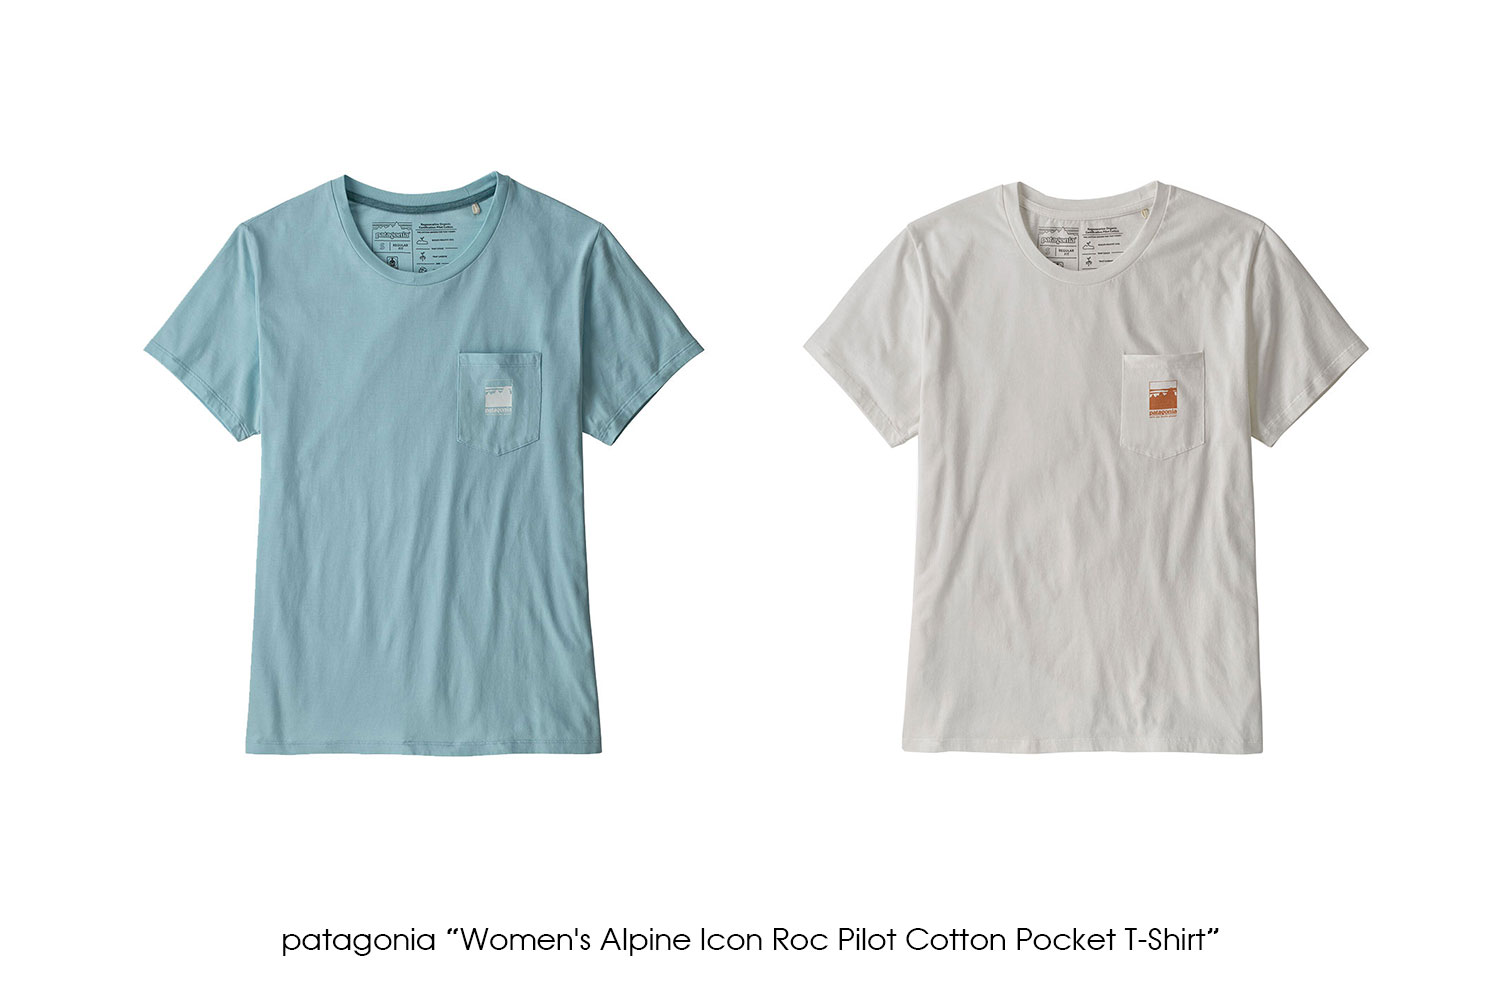 patagonia "Women's Alpine Icon Roc Pilot Cotton Pocket T-Shirt"